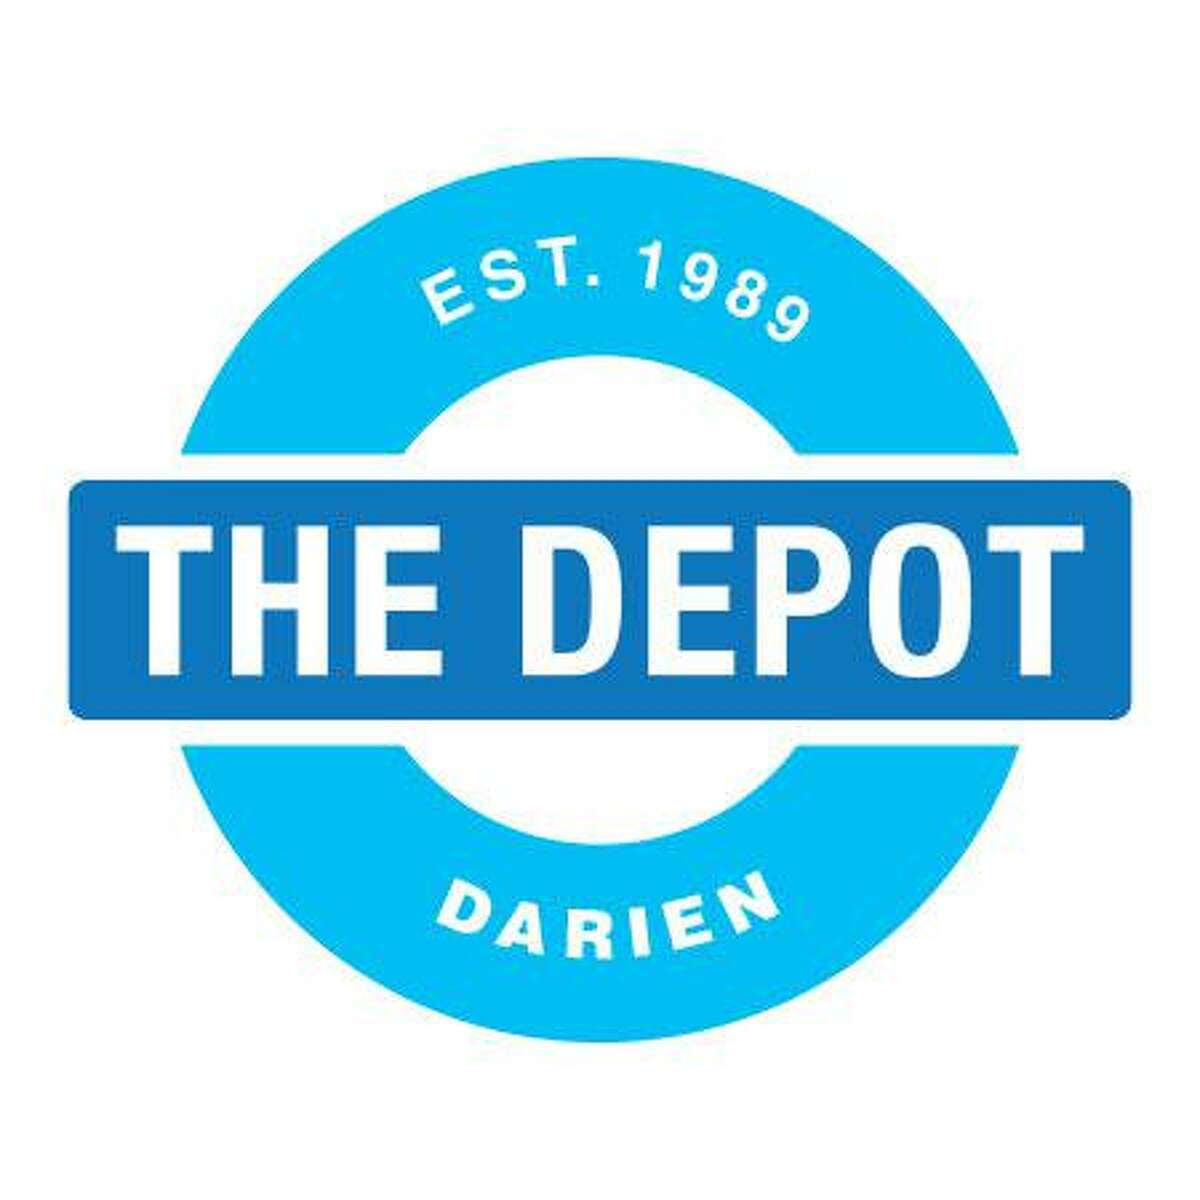 The Depot, Darien's youth center, logo